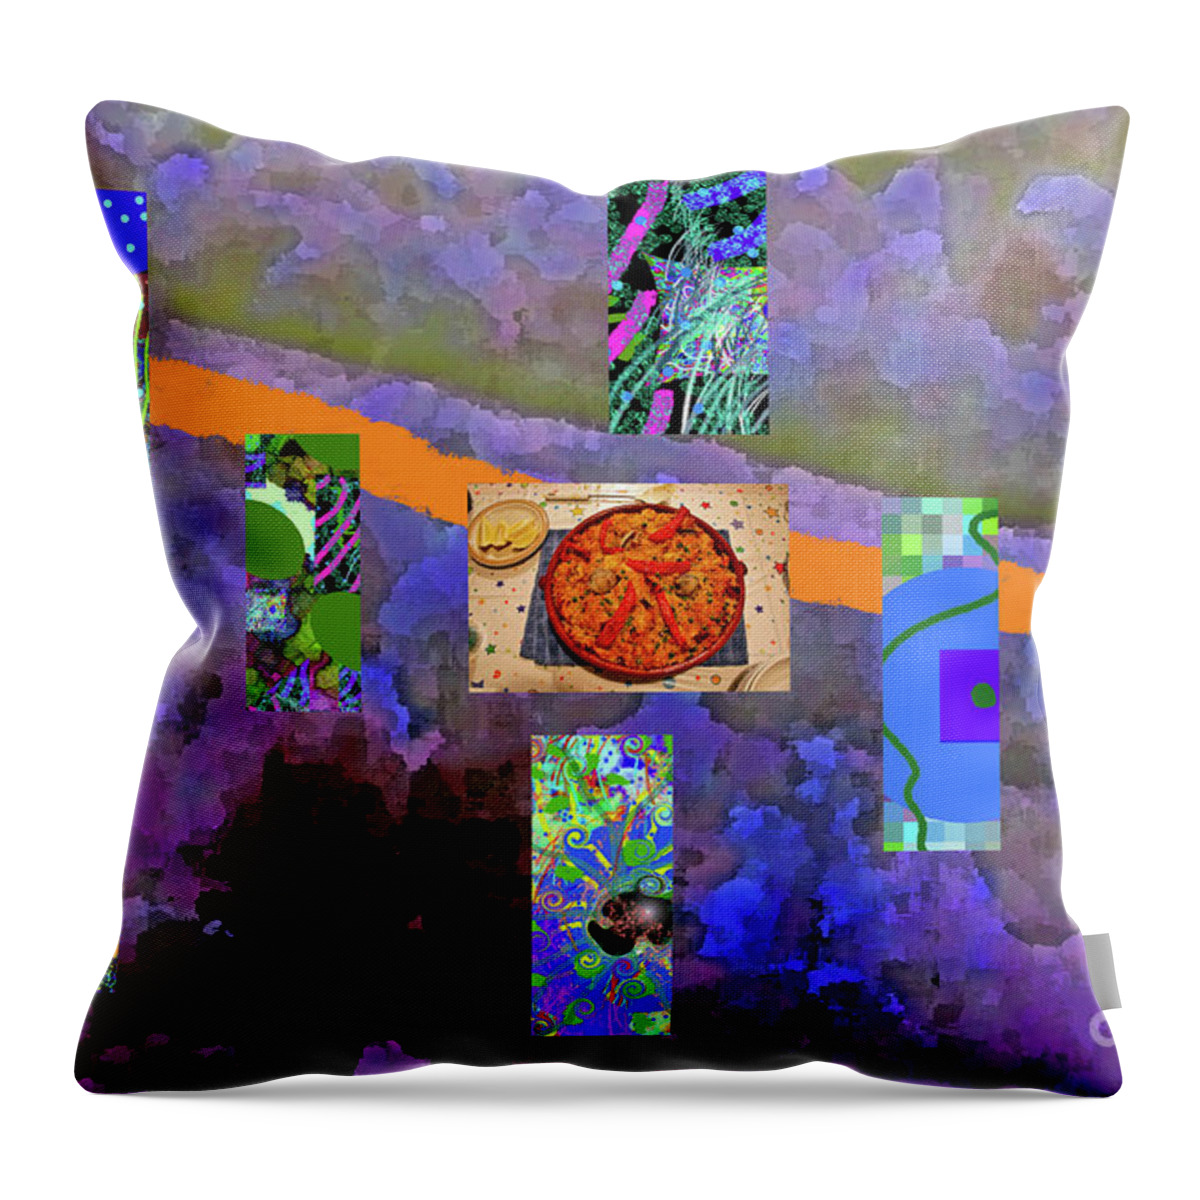  Throw Pillow featuring the digital art 1-2022c by Walter Paul Bebirian